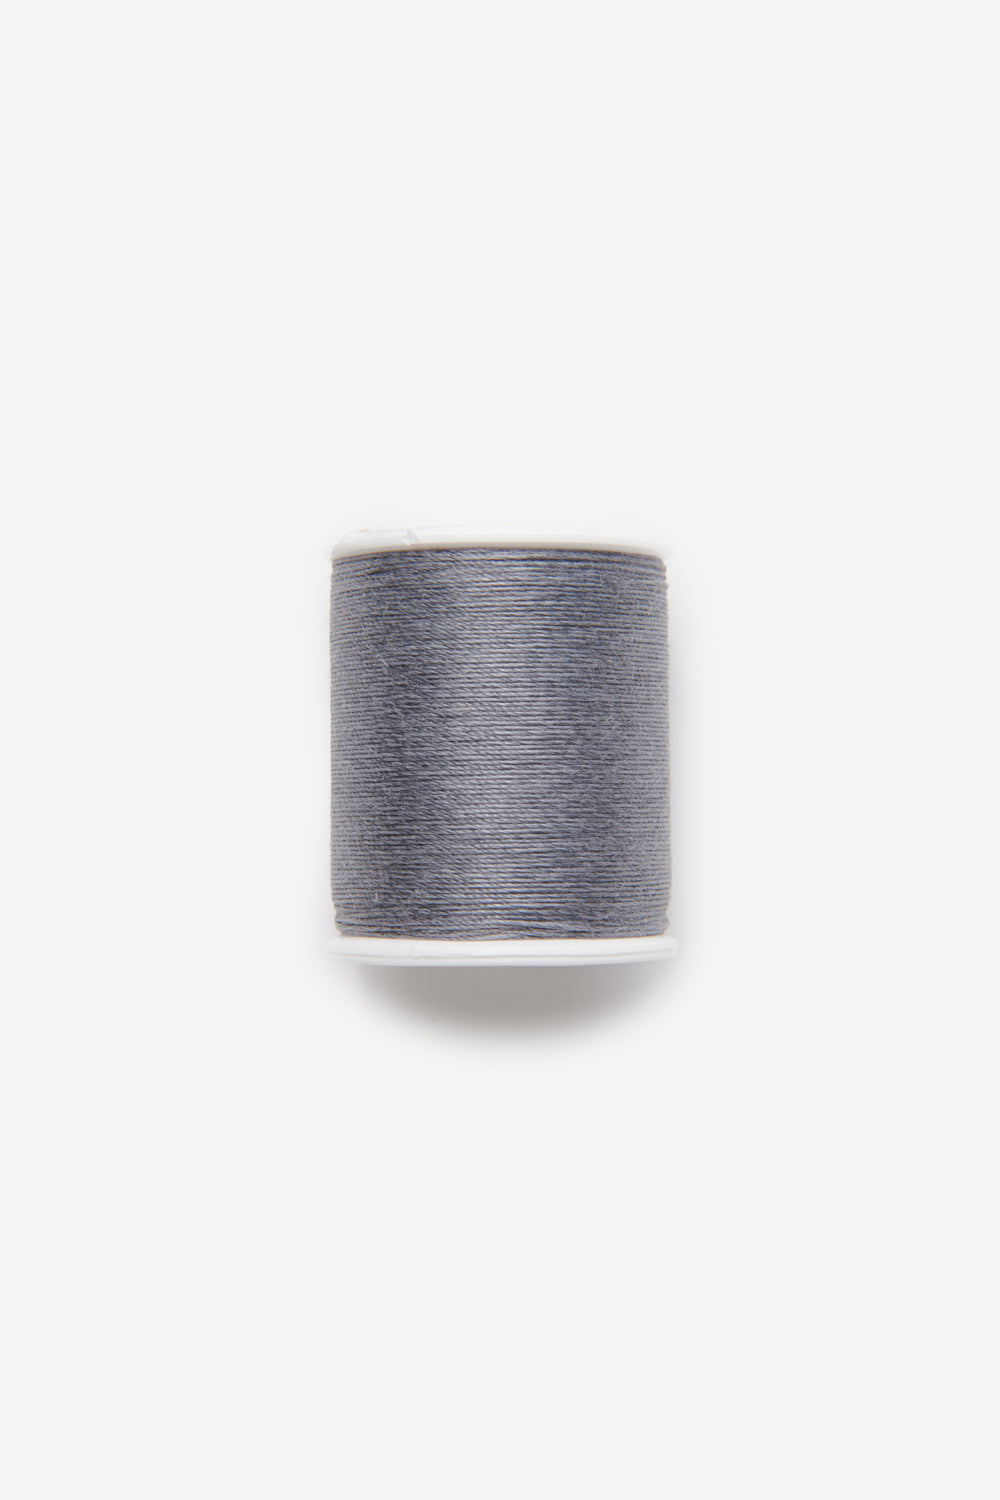 Button Craft Thread in slate.